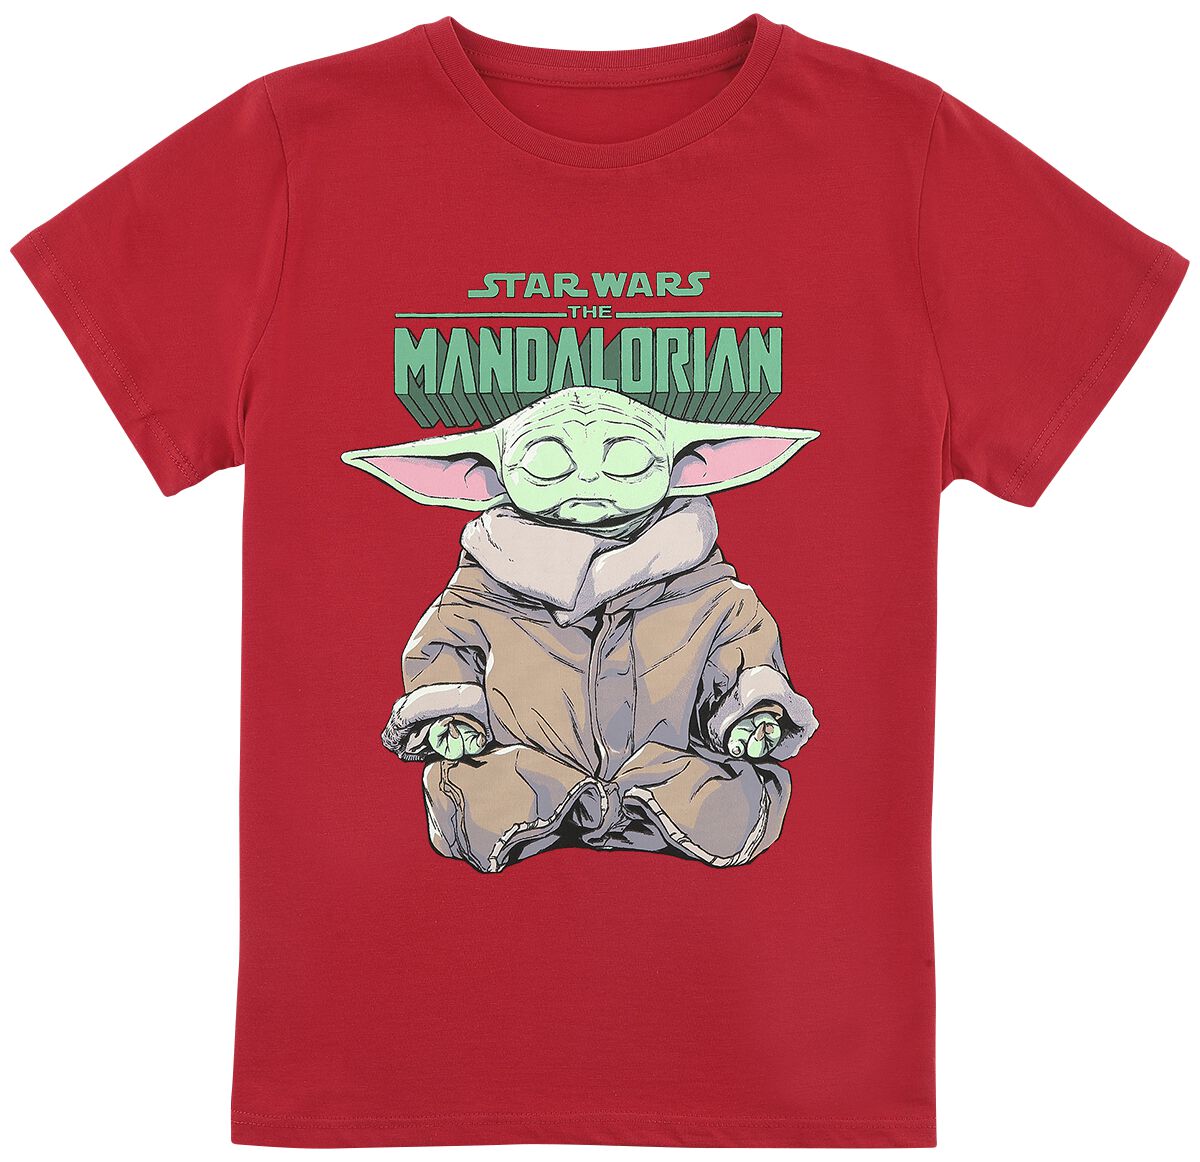 Star Wars Kids - The Mandalorian - Baby Yoda - Grogu - Meditation T-Shirt red